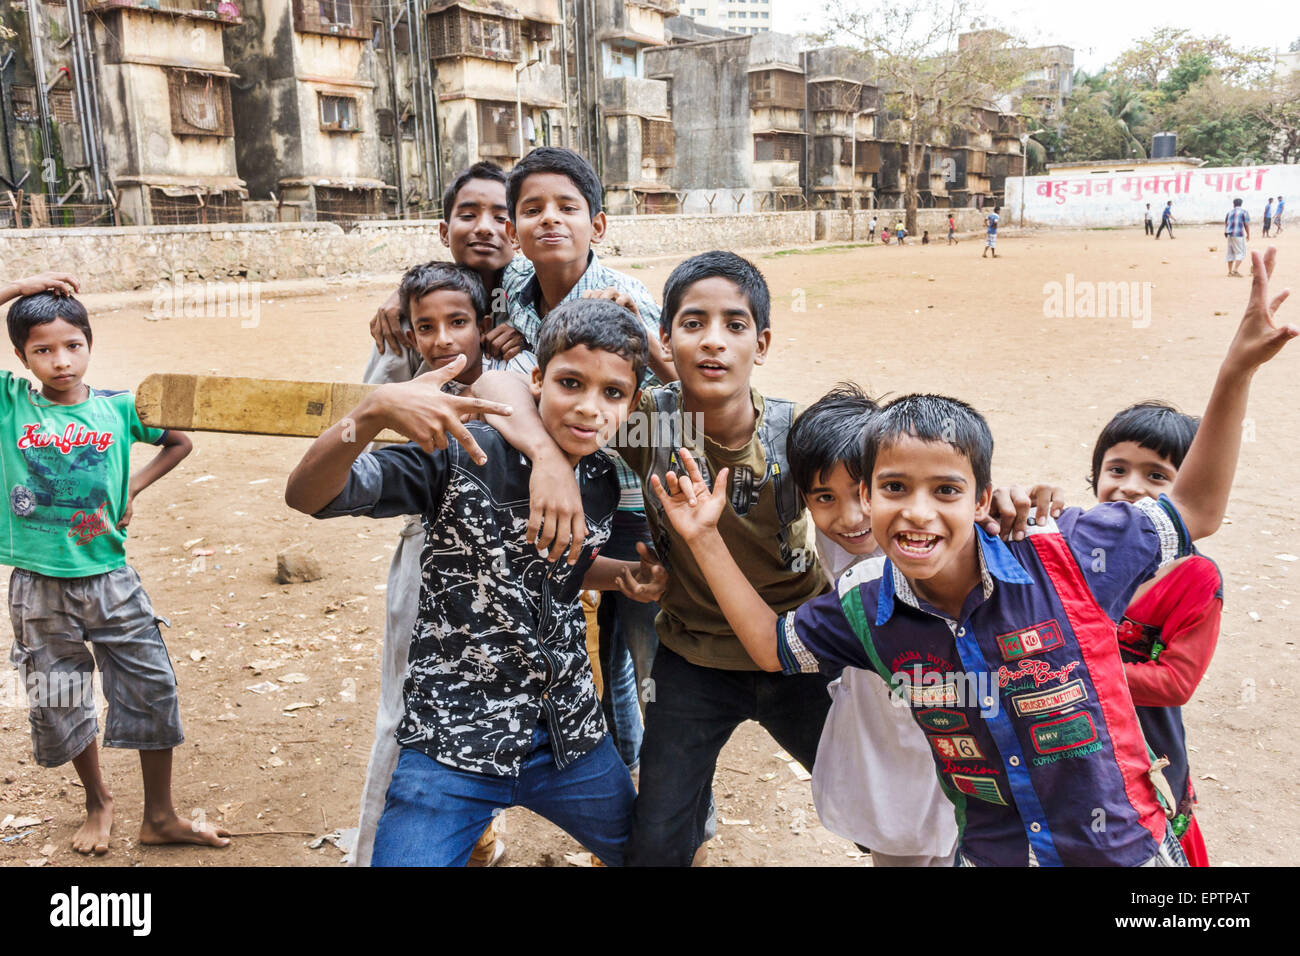 Mumbai India,Dharavi,Shahu Nagar Road,slum,dirt lot,cricket field pitch,male boy boys kids children friends,playing,bat,hand signals,India150228035 Stock Photo